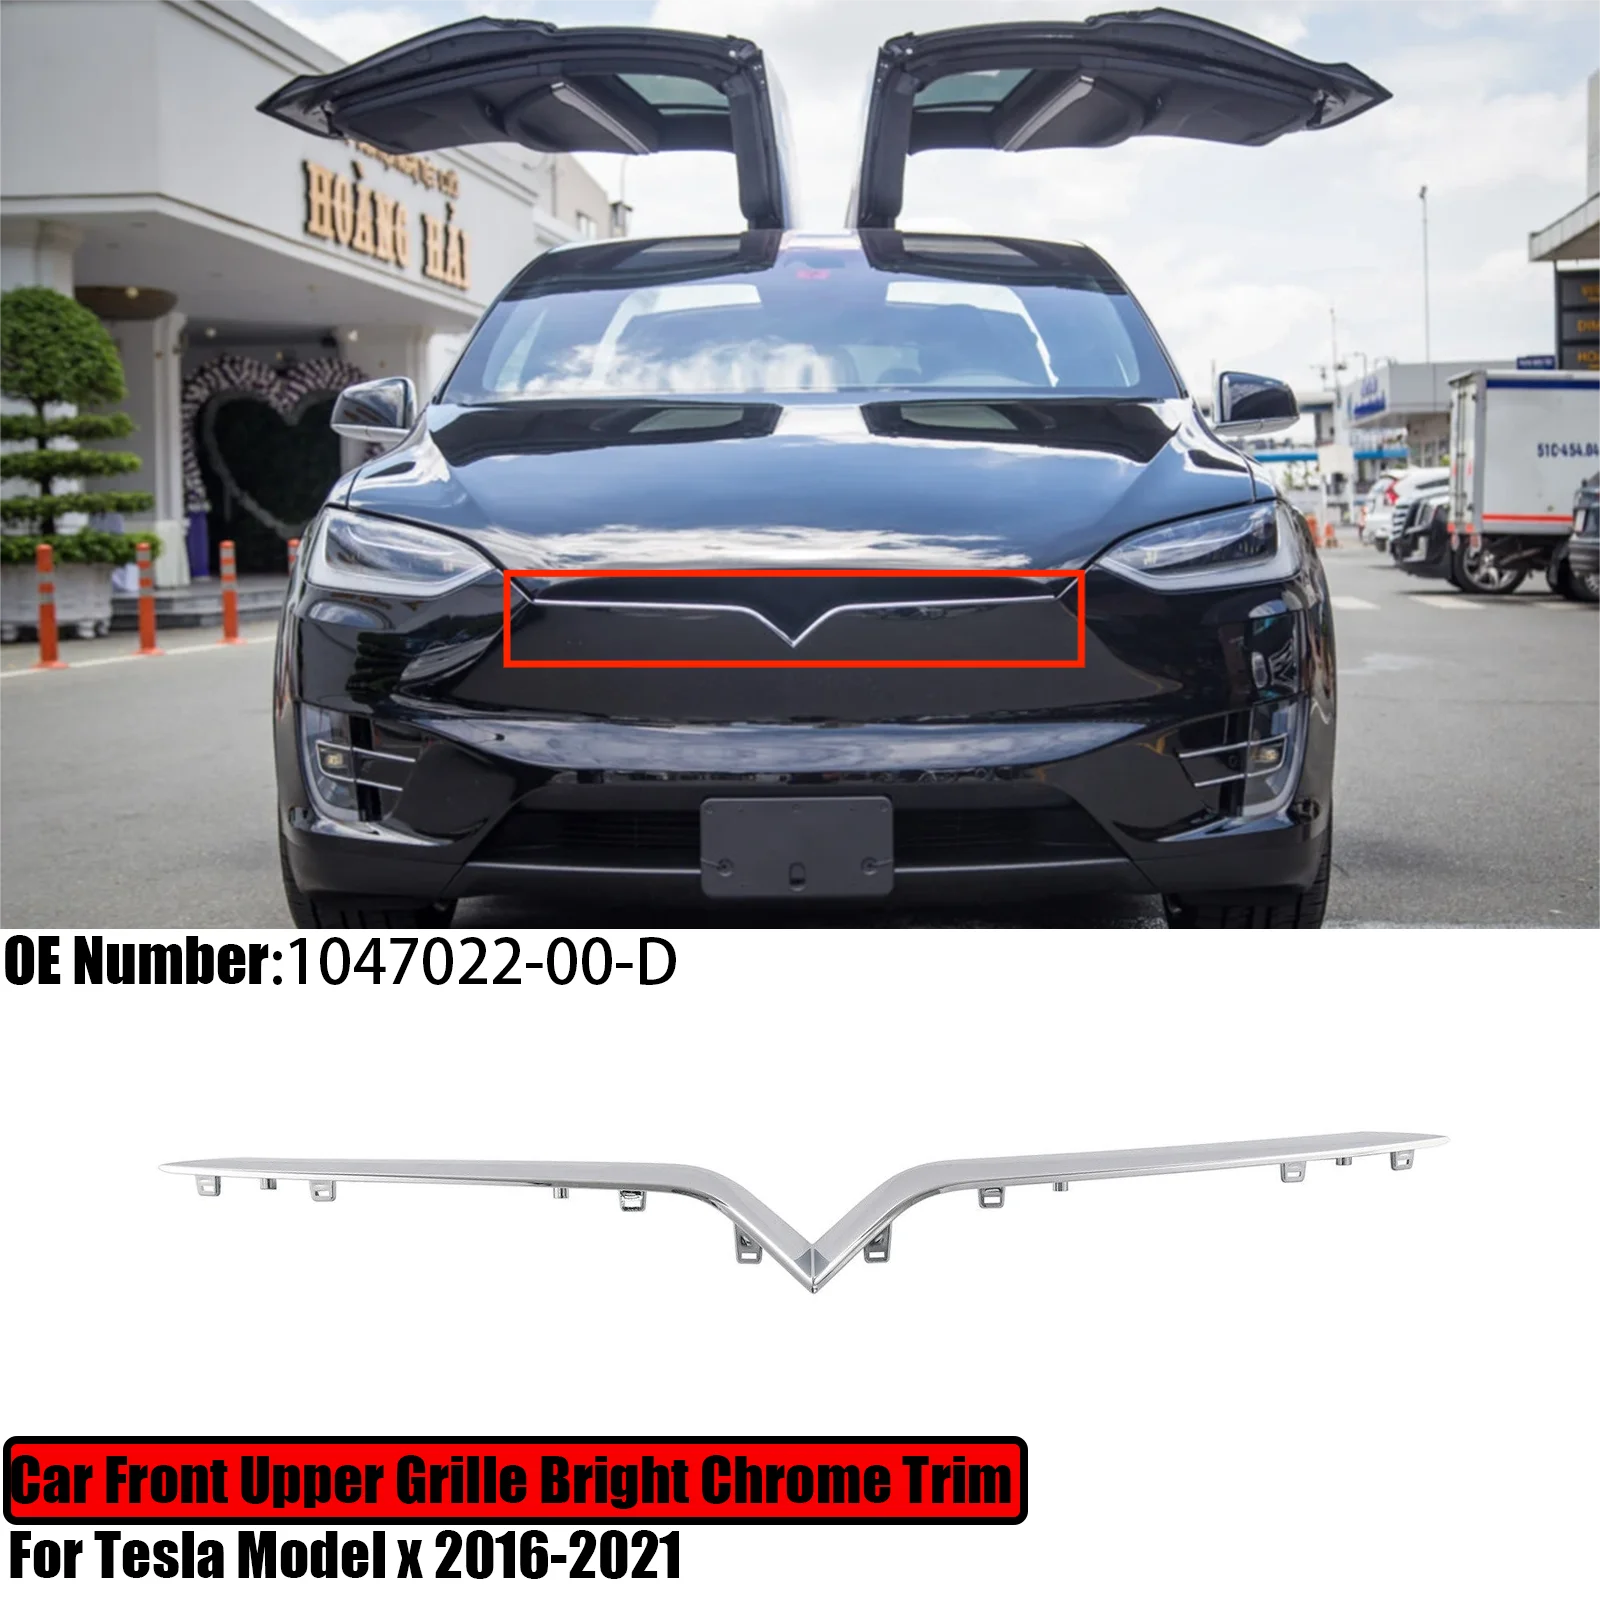 

Car Front Bumper Upper Center Bright Chrome Grille Trim For Tesla Model x 2016-2021 1047022-00-D Molding Grill